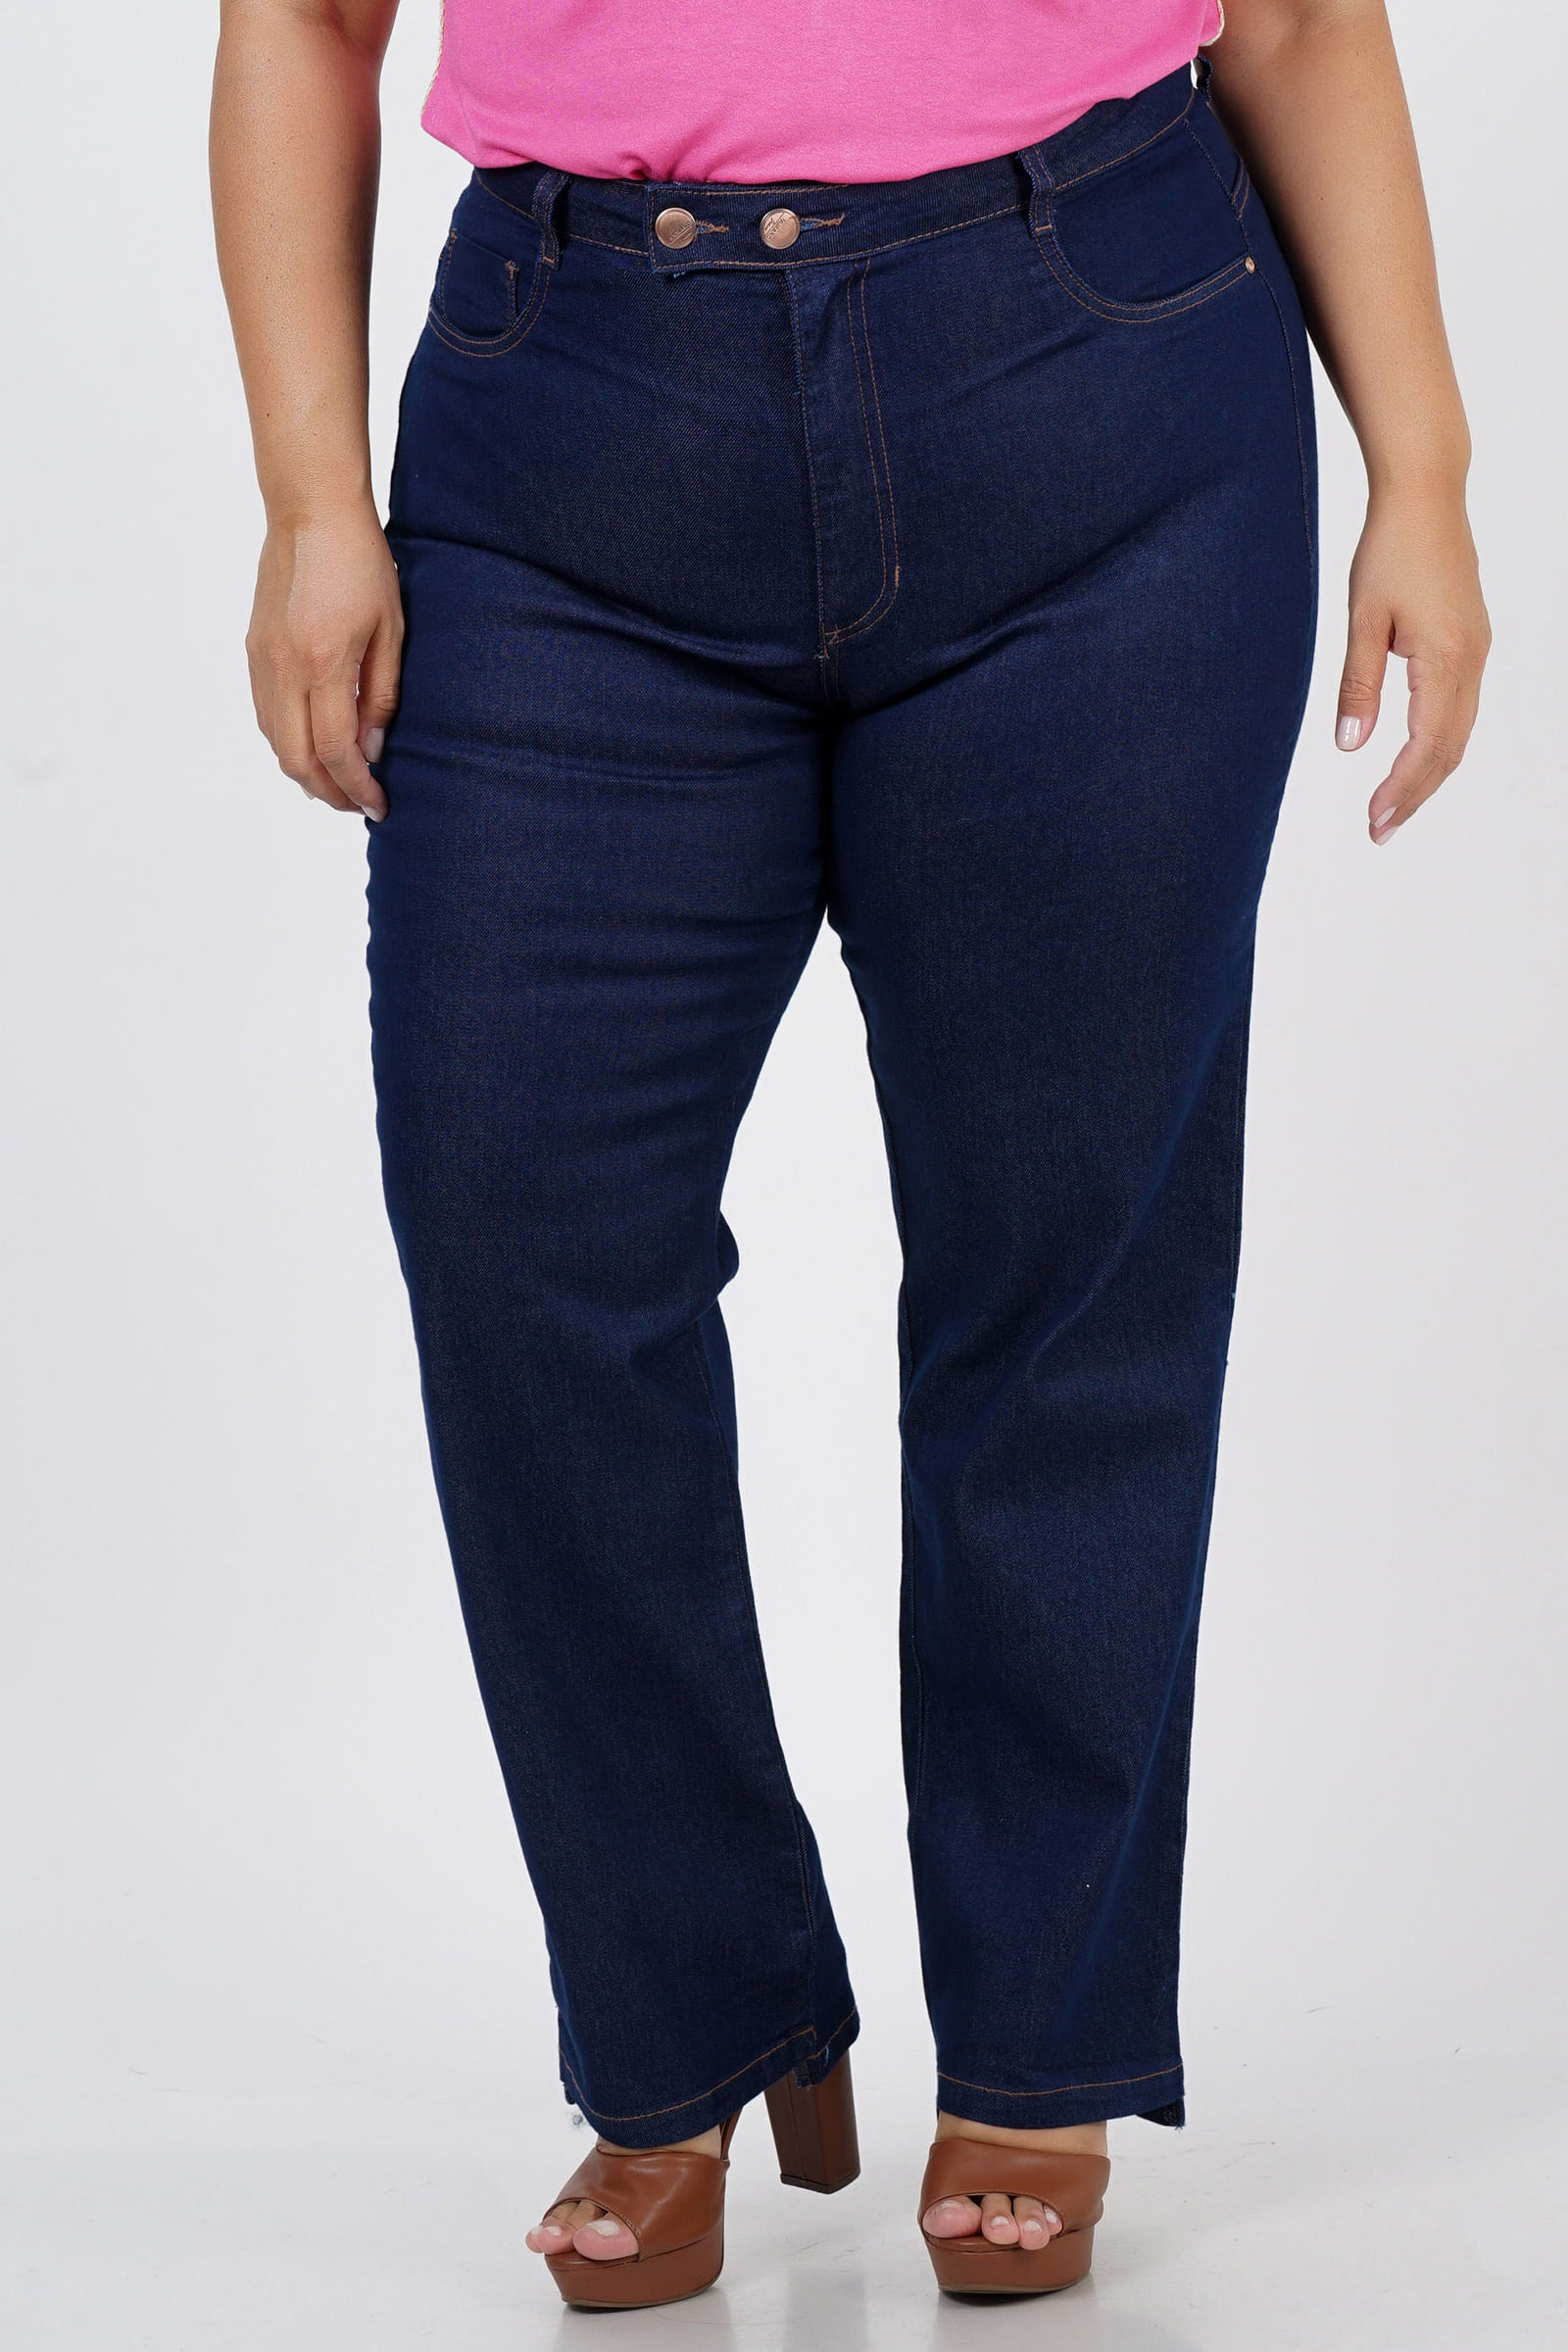 Calca-reta-jeans-cos-transpassado-plus-size_0102_1